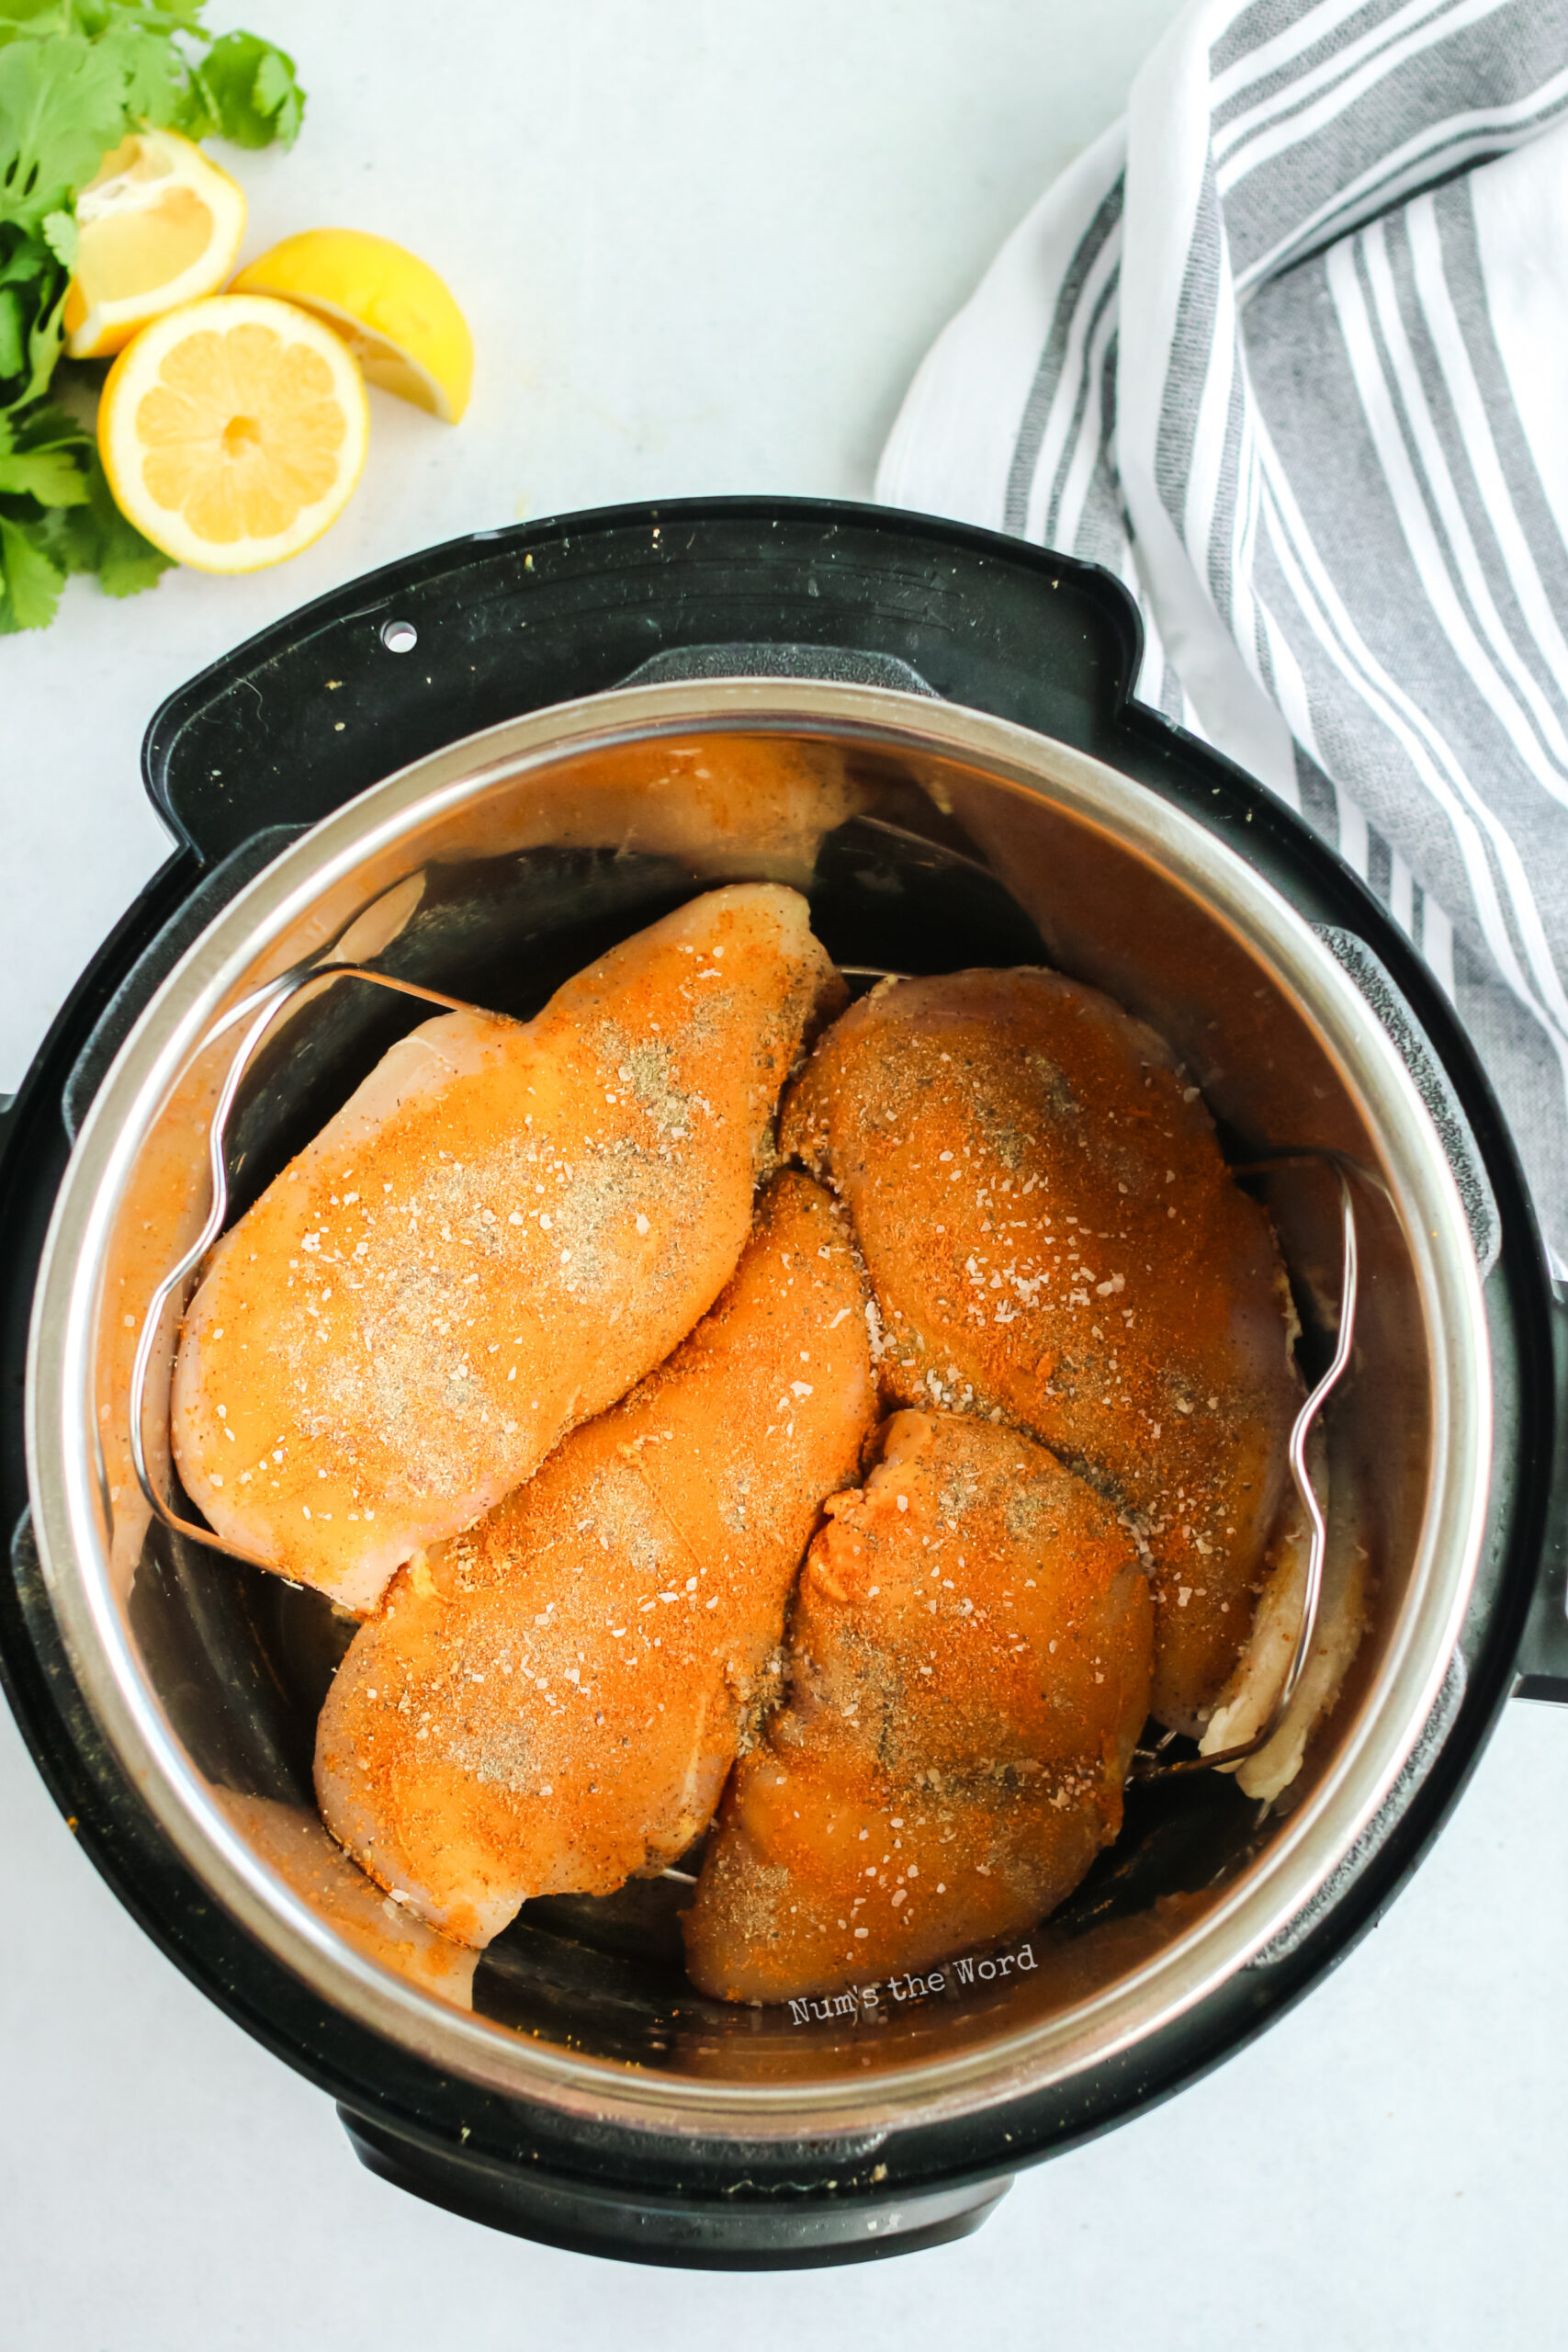 seasoned, uncooked chicken in the instant pot